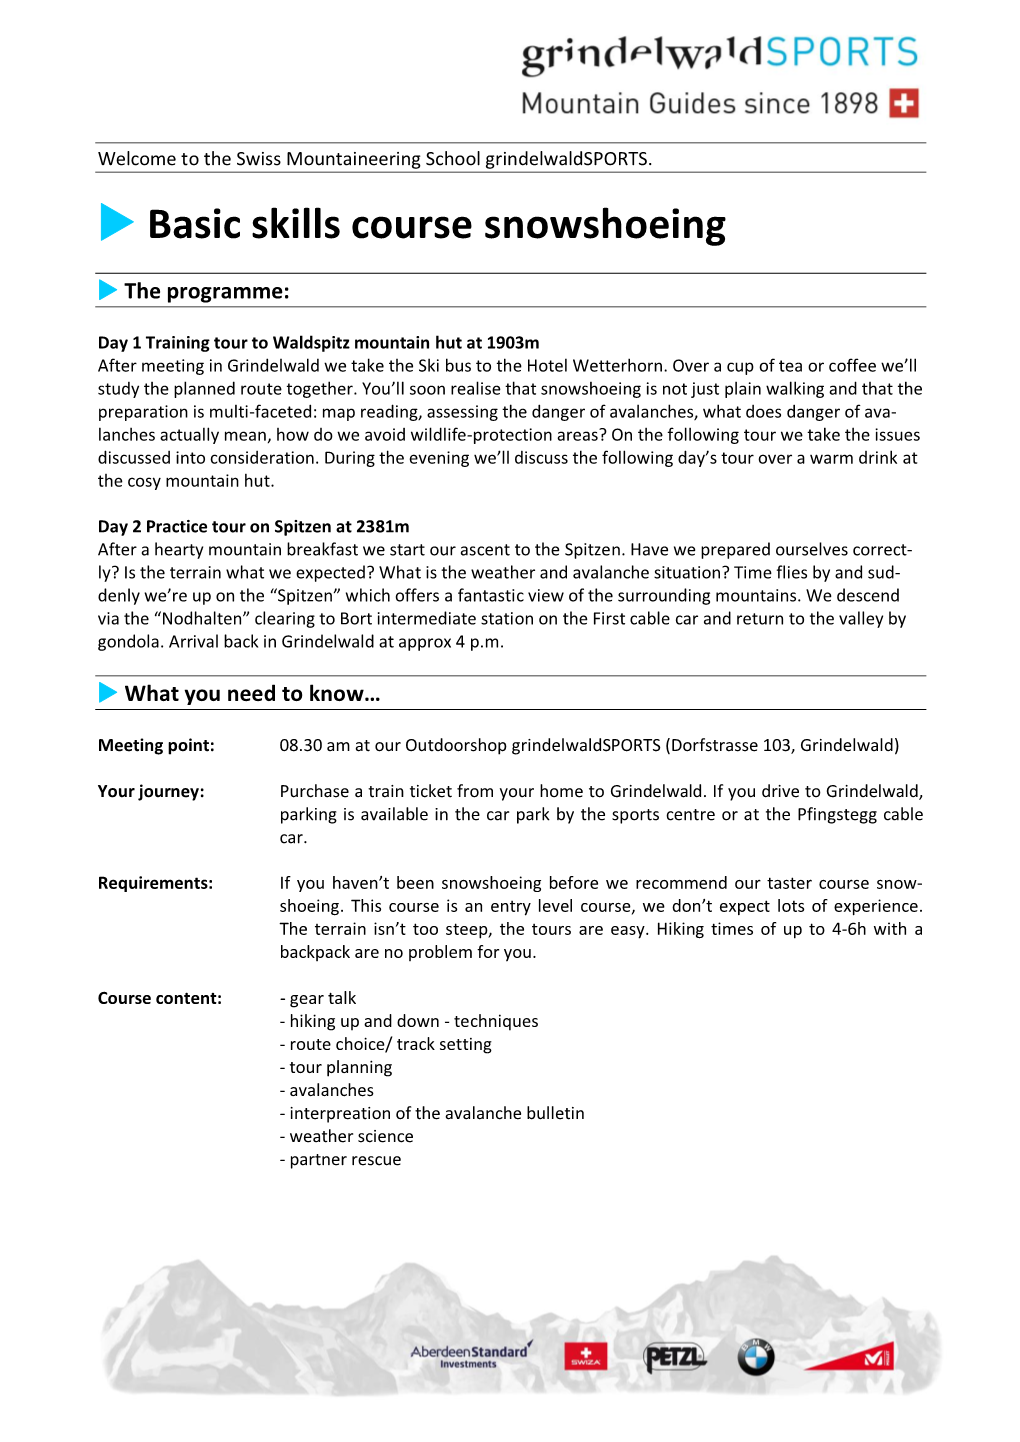 Basic Skills Course Snowshoeing